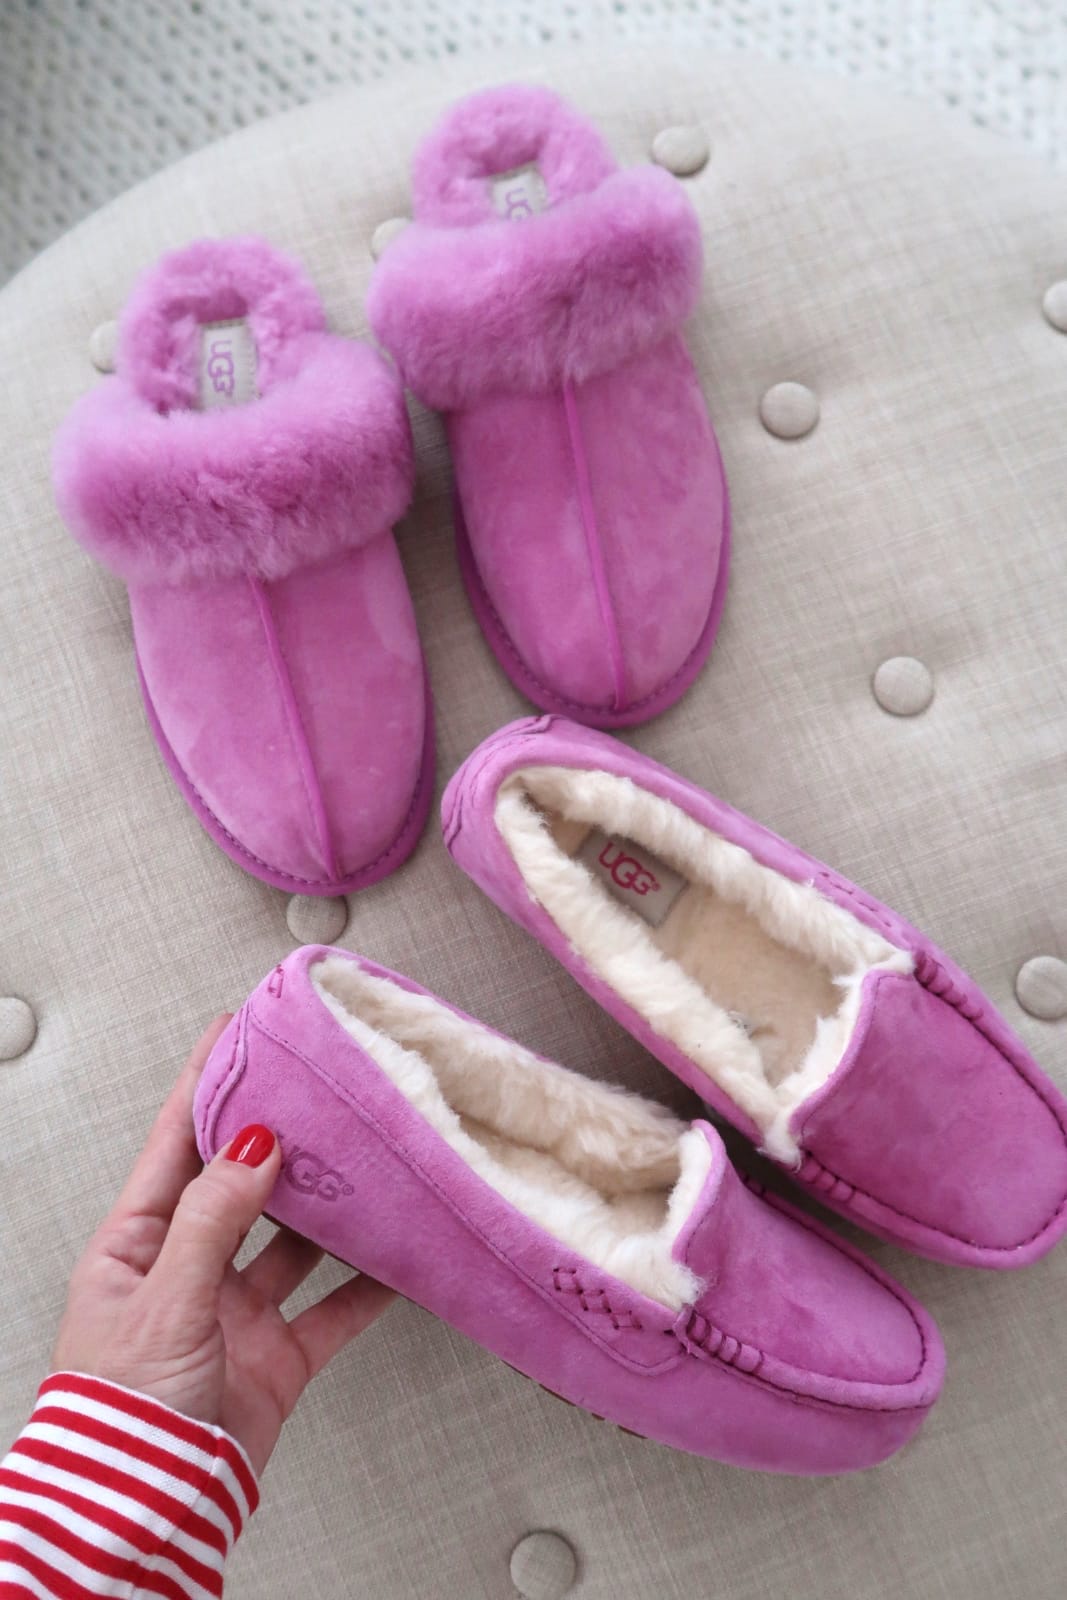 Cyber Monday Amazon UGG slippers